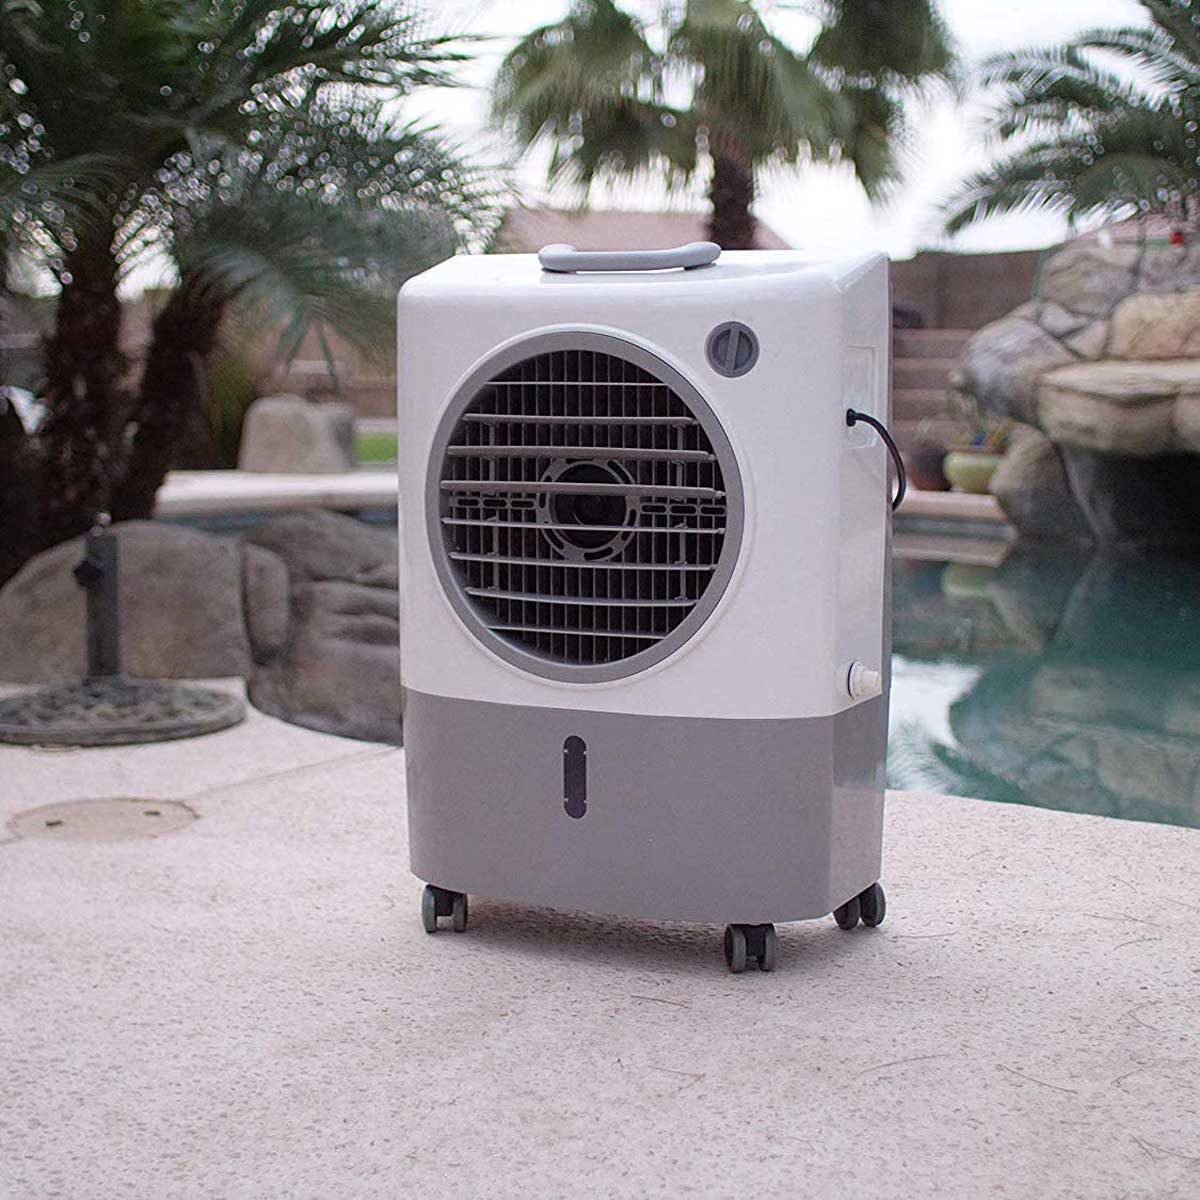 8 Best Evaporative Coolers To Buy